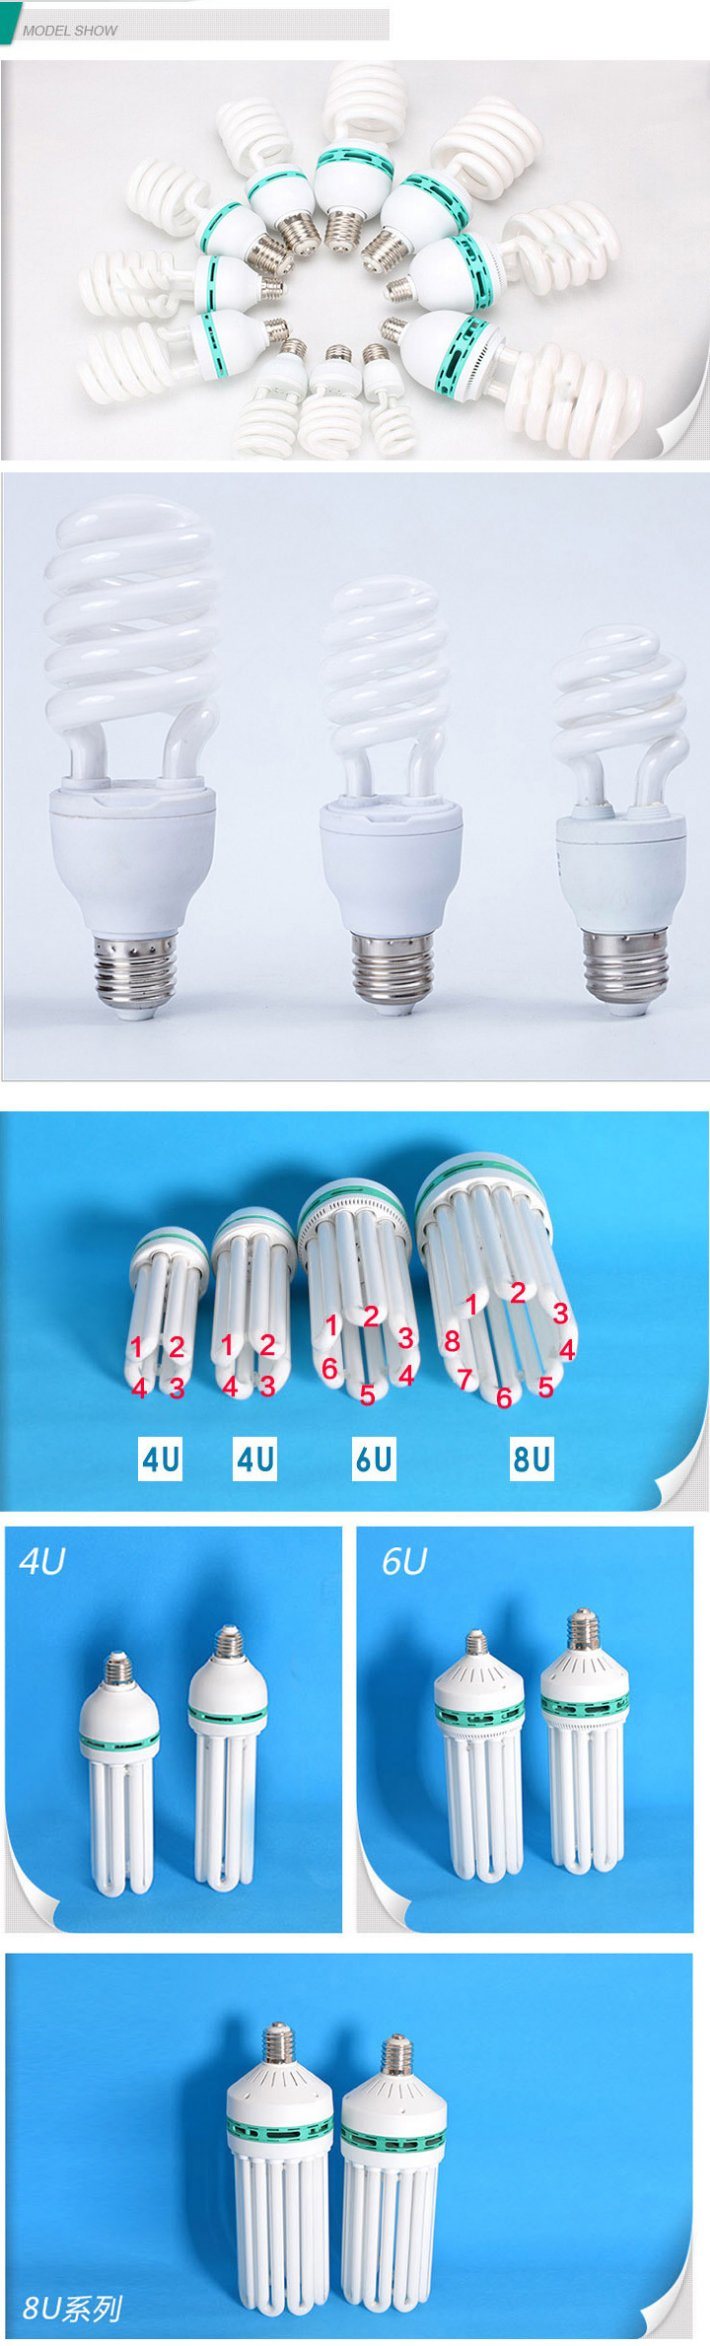 Hot Sale High Bright 2u-8u Energy Saving Bulb with Ce RoHS